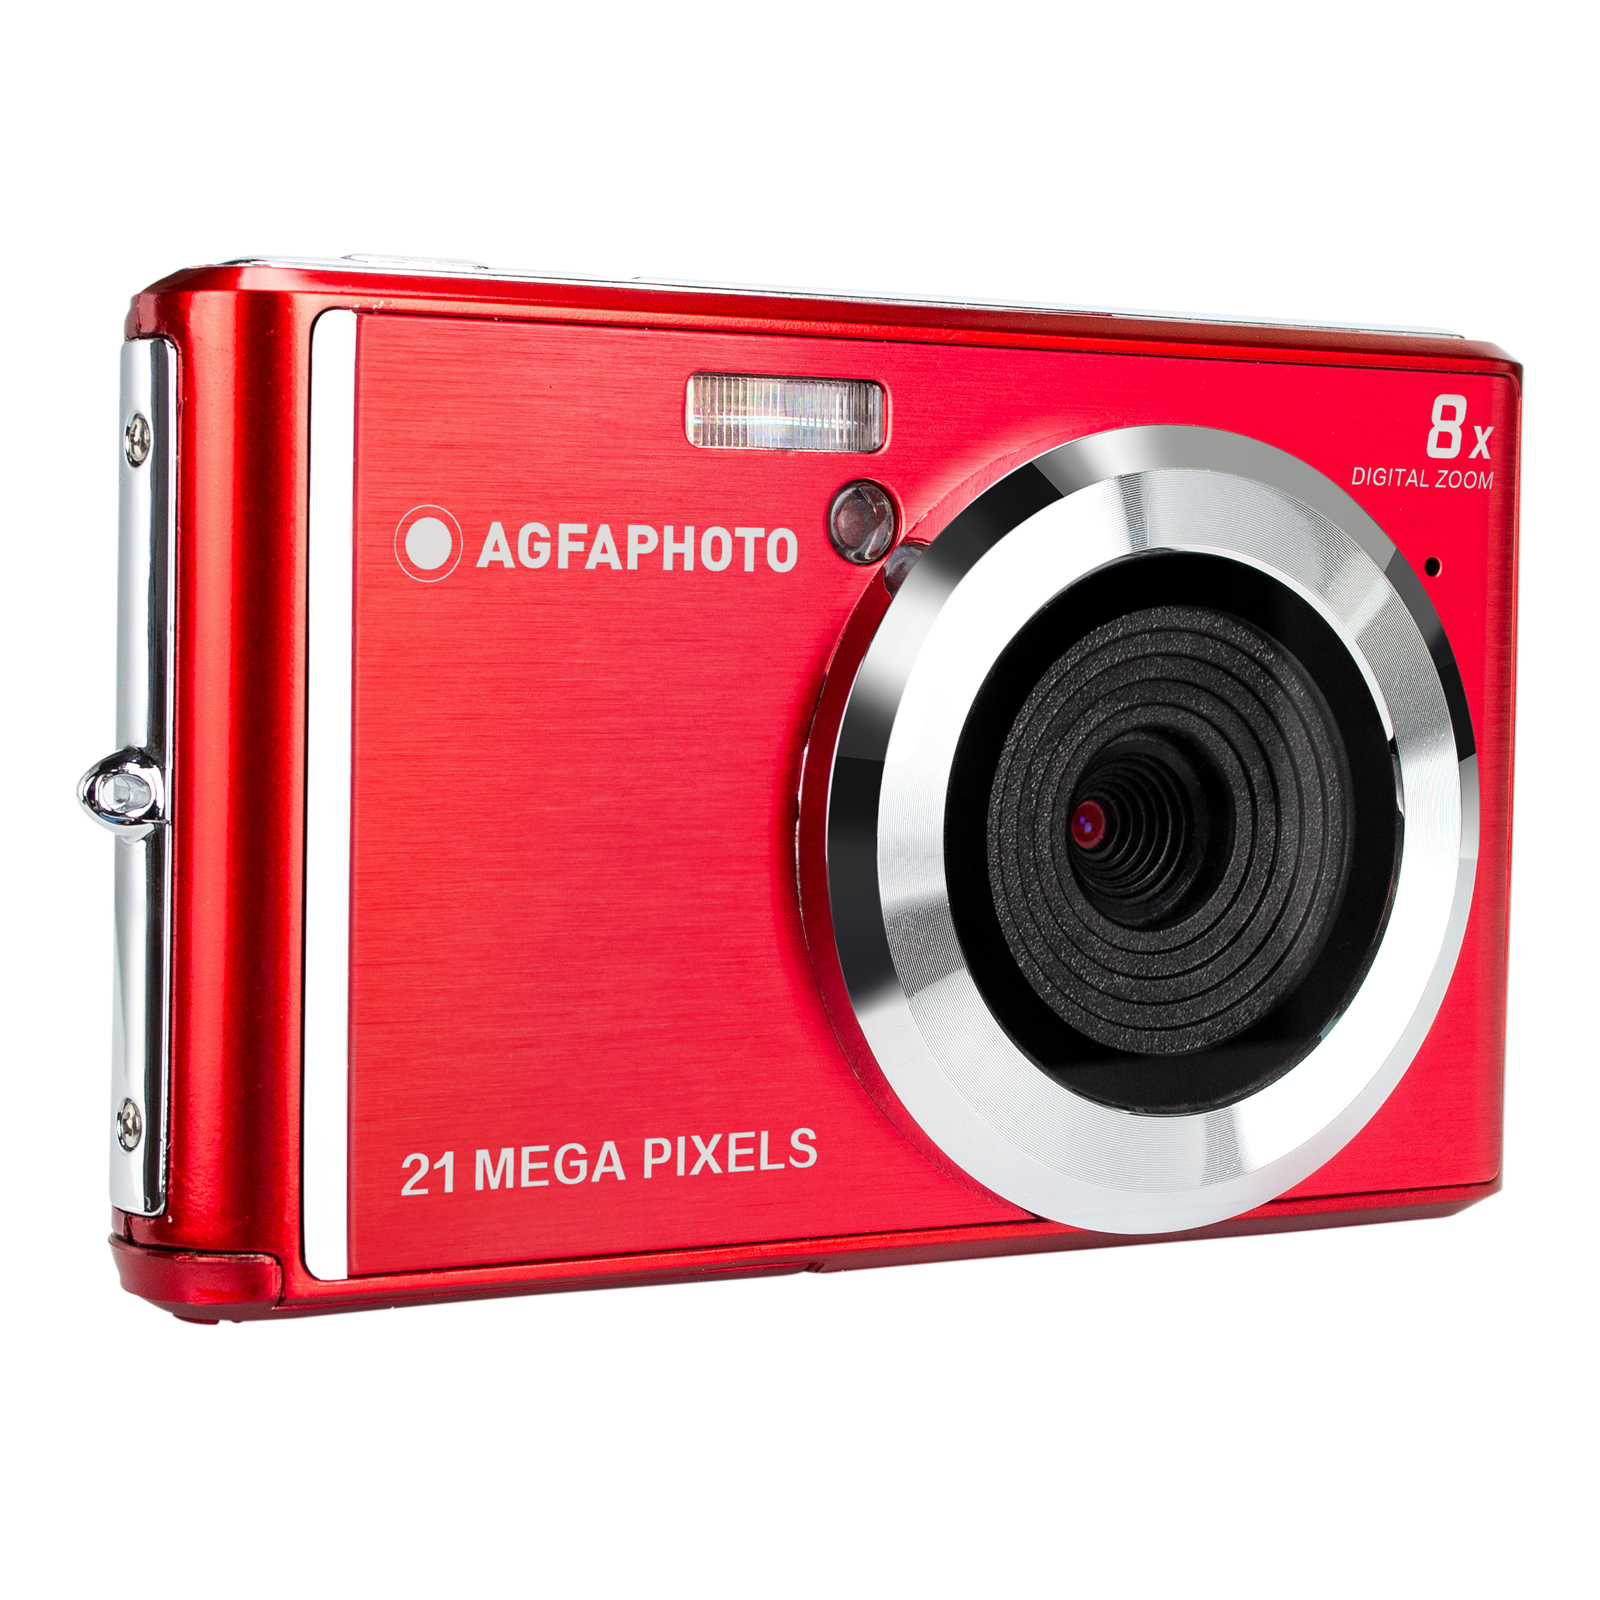 AgfaPhoto DC5200 Kompakte Digitalkamera 21MP, 8x Digitaler Zoom, 2,4 Zoll